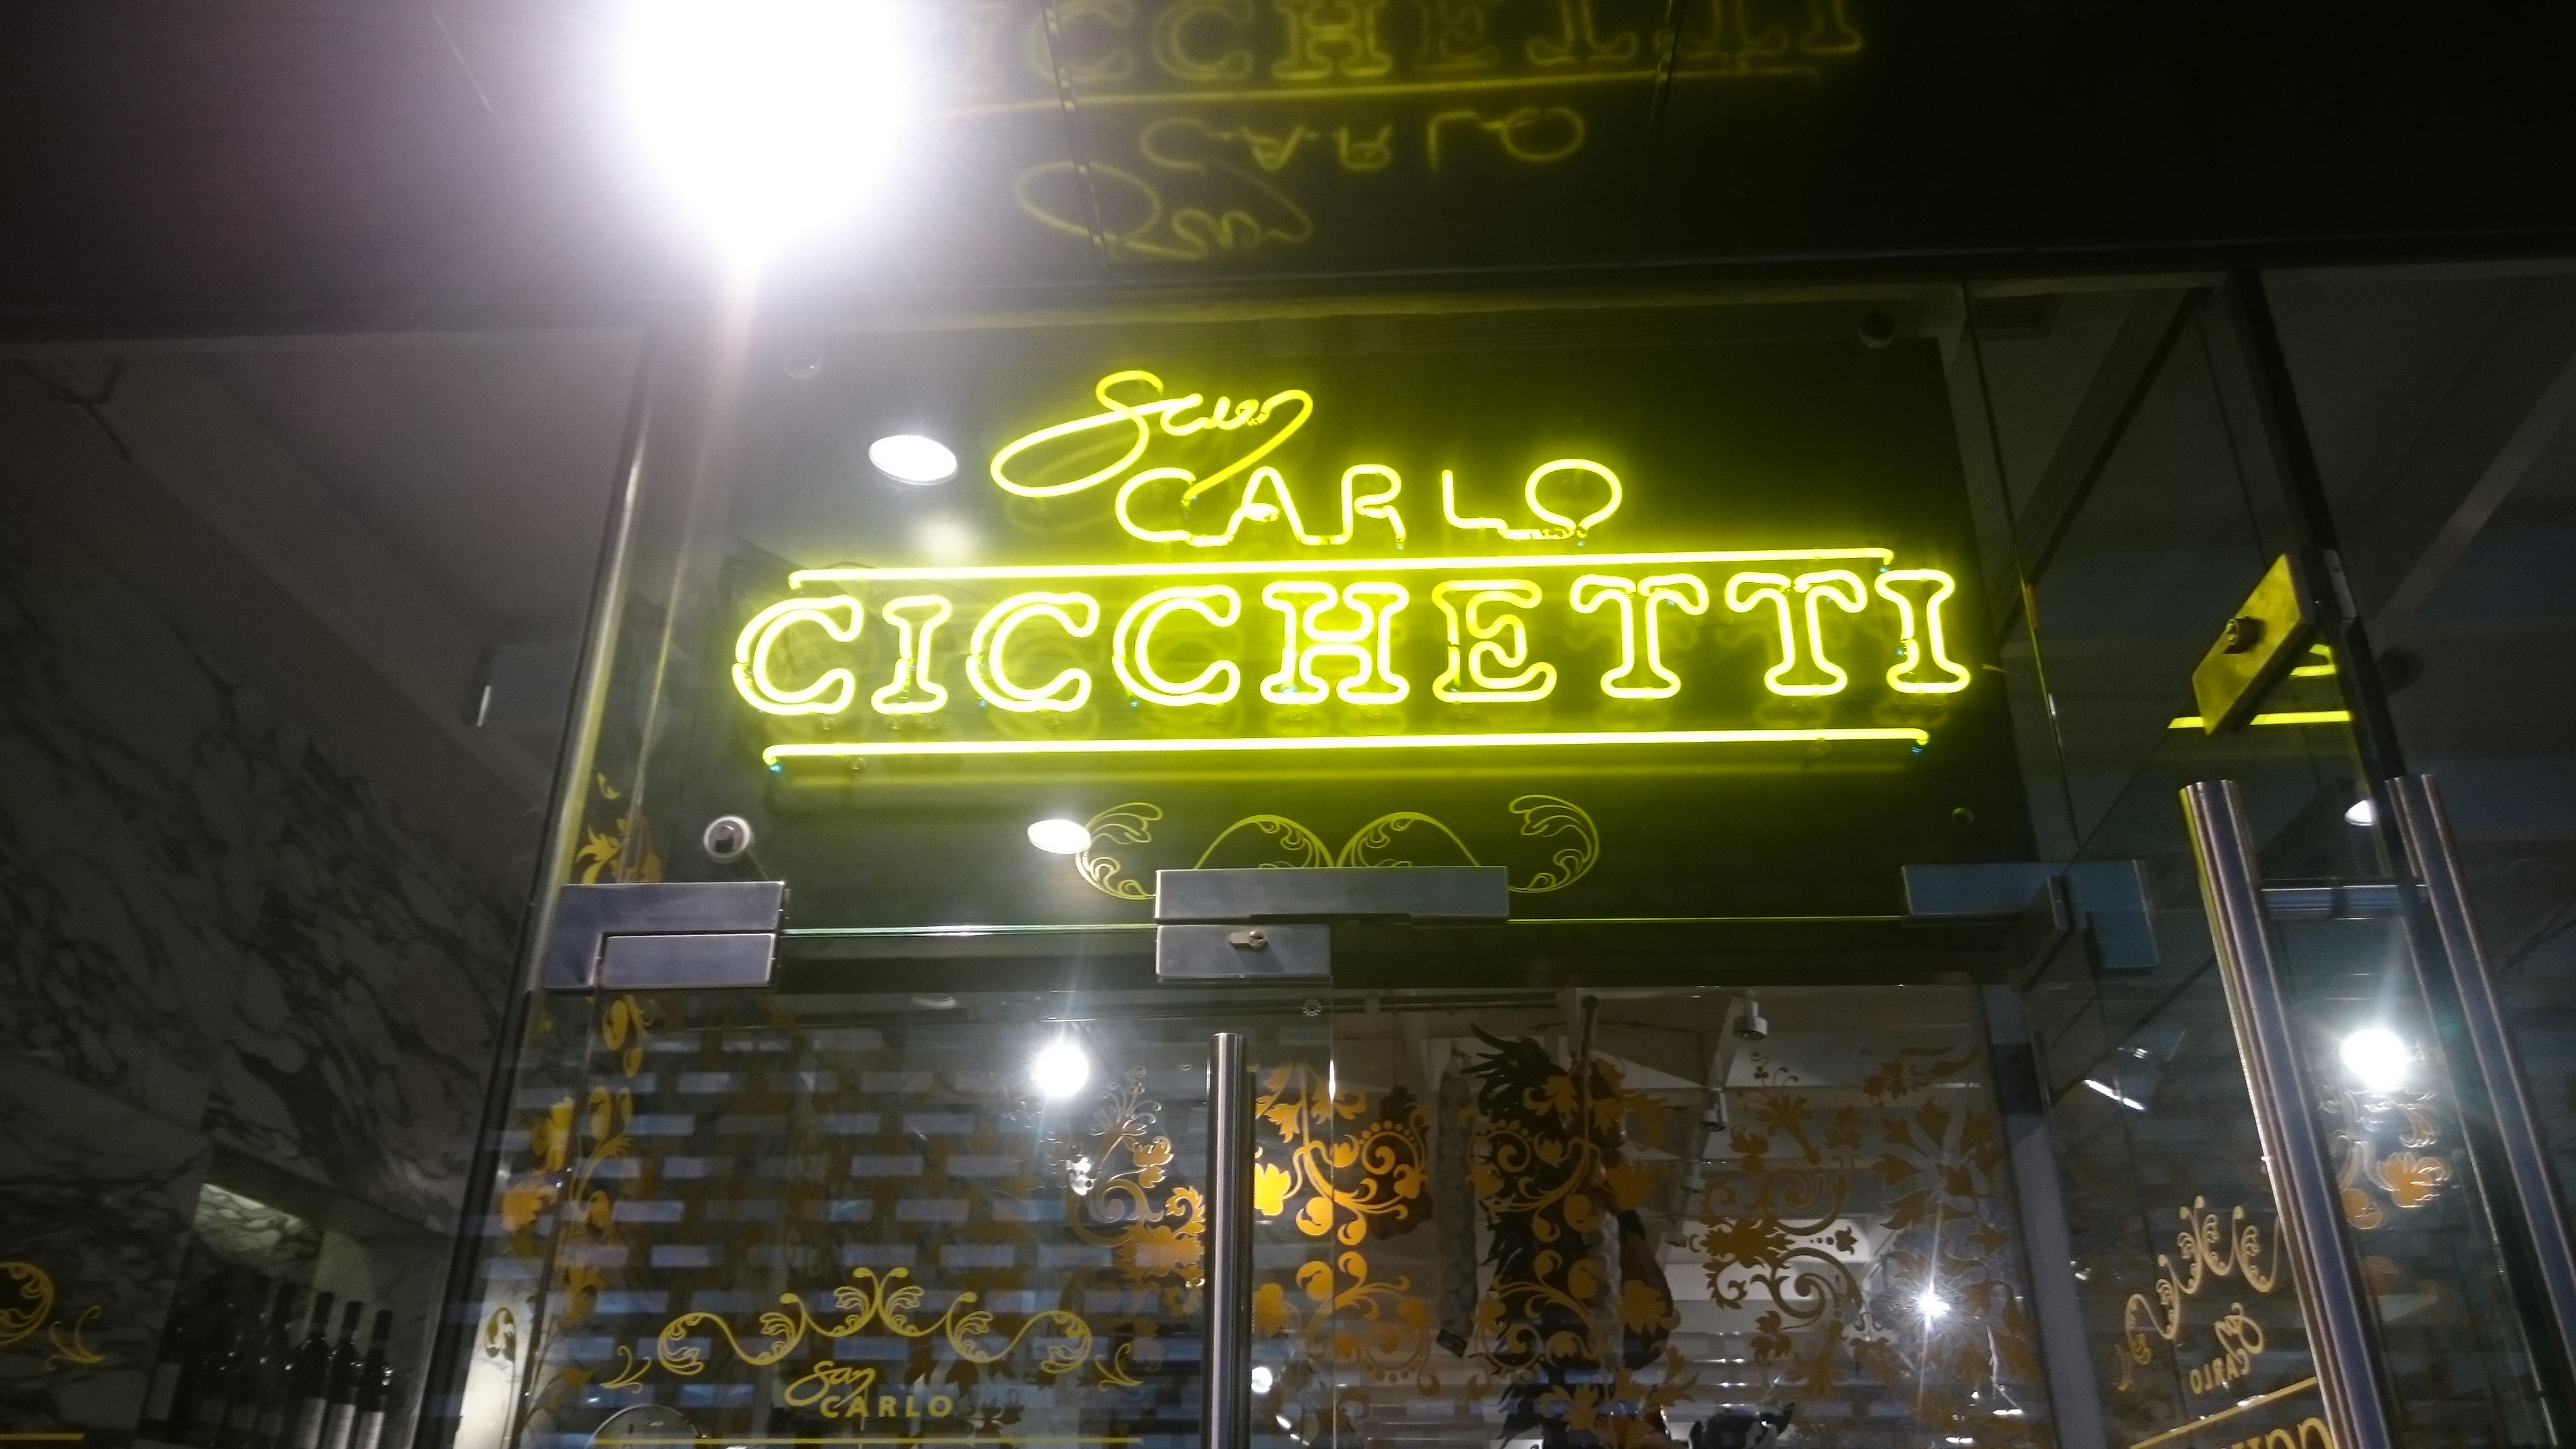 San Carlo, Cicchetti 